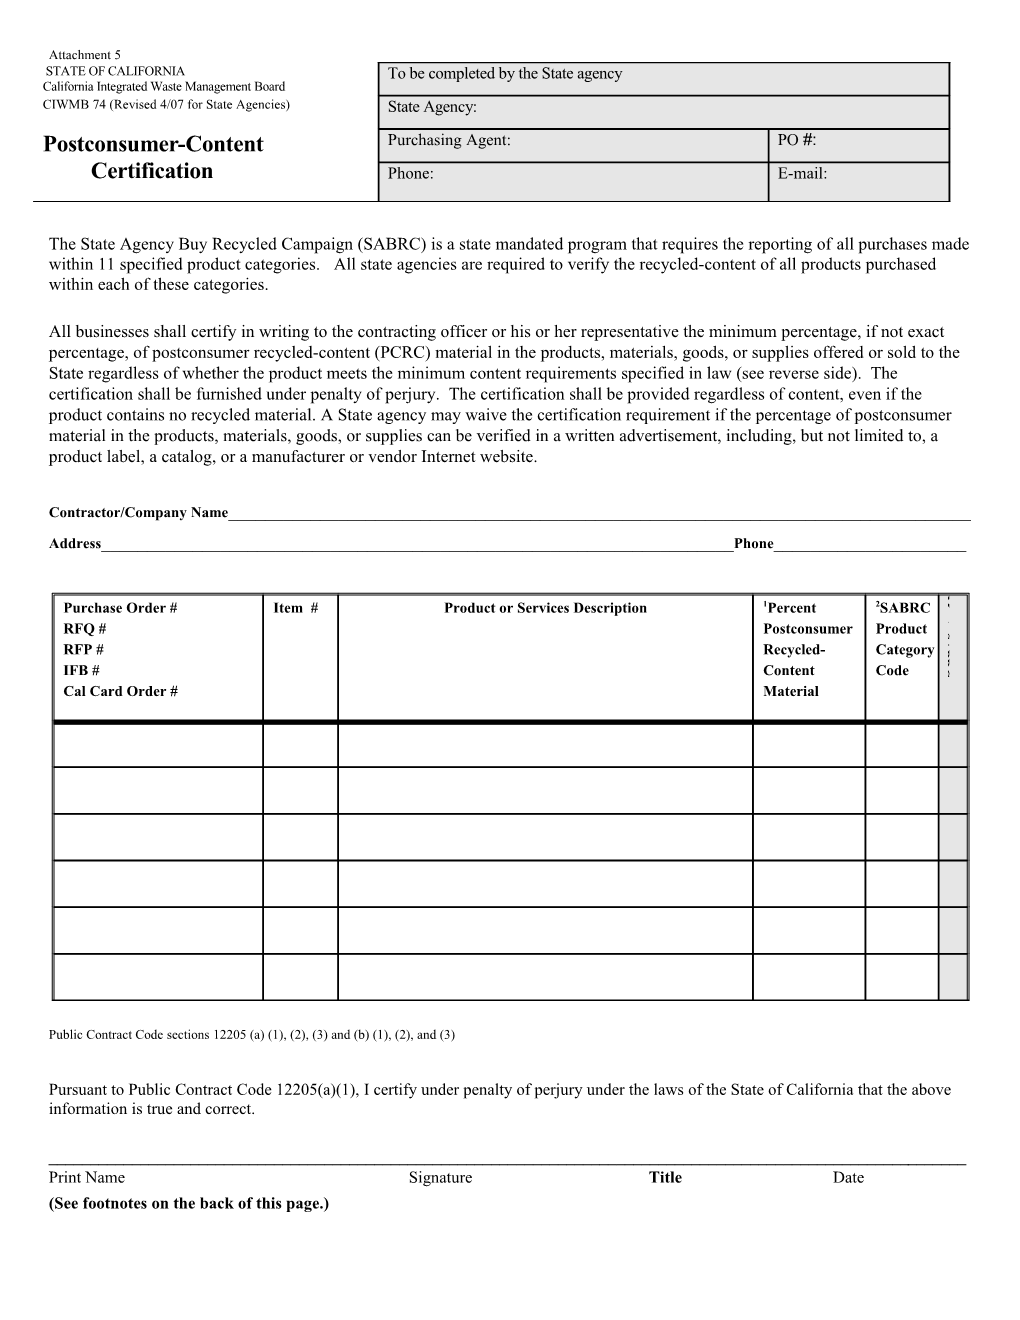 Postconsumer-Content Certification, CIWMB 74 (Revised 4/07)